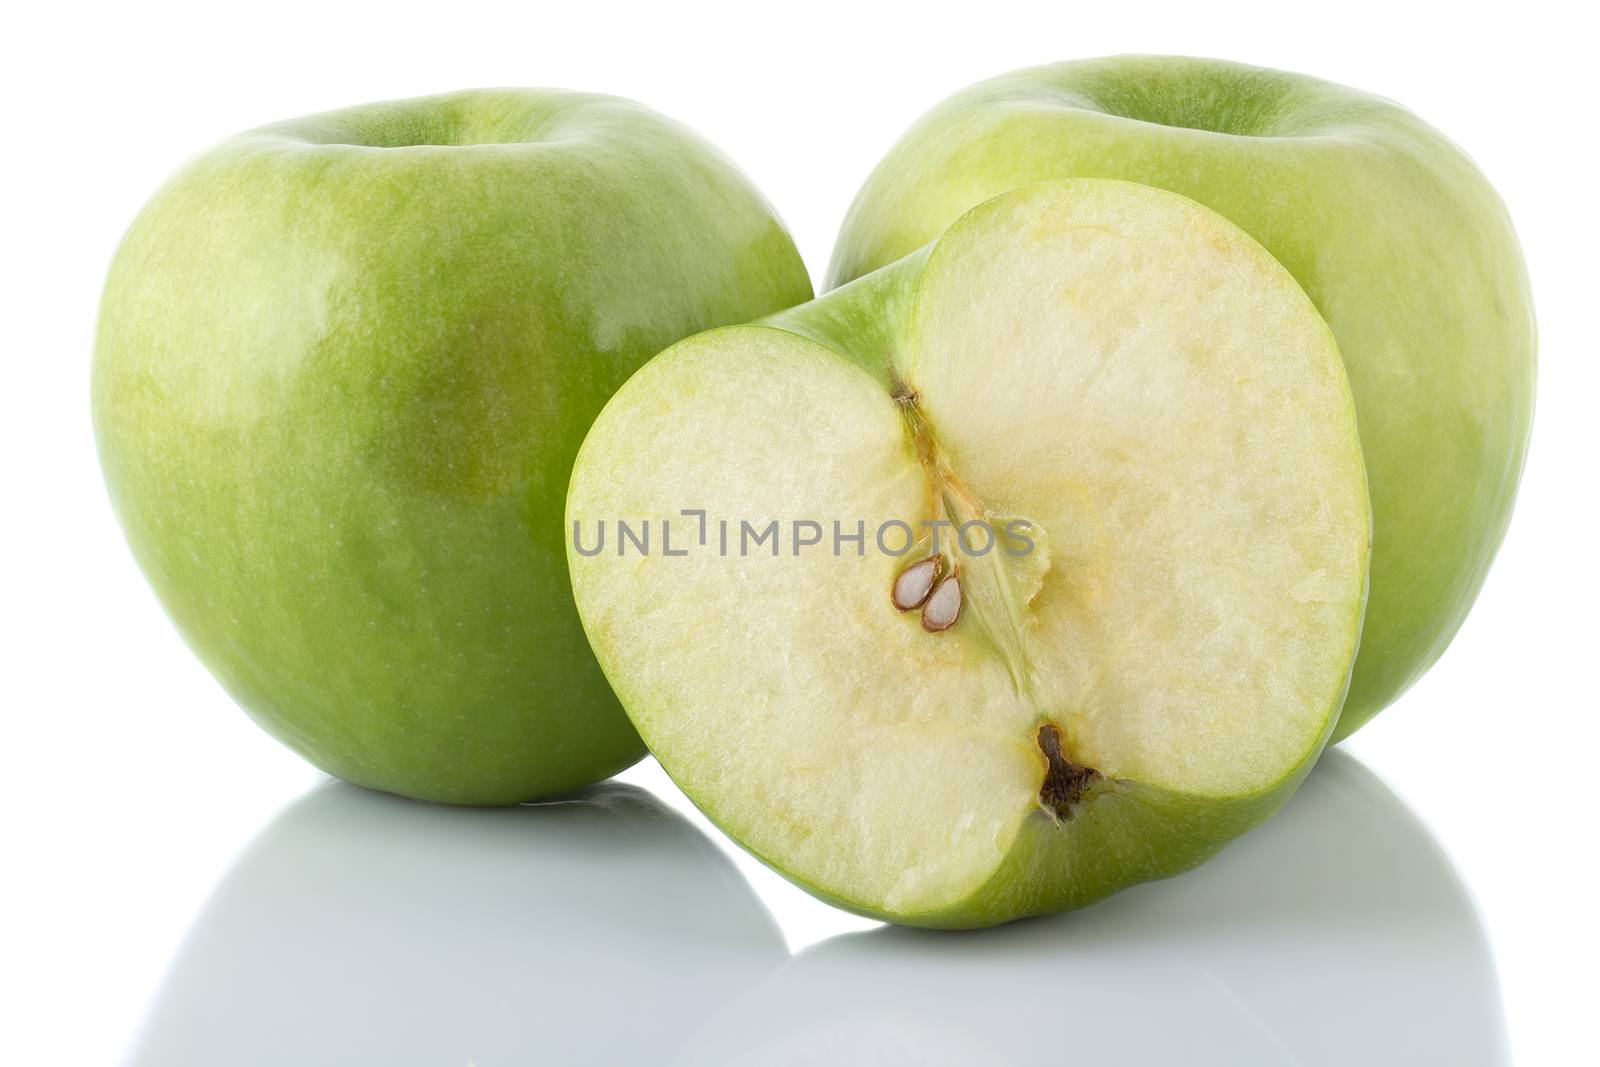 Juicy green apple by baronvsp